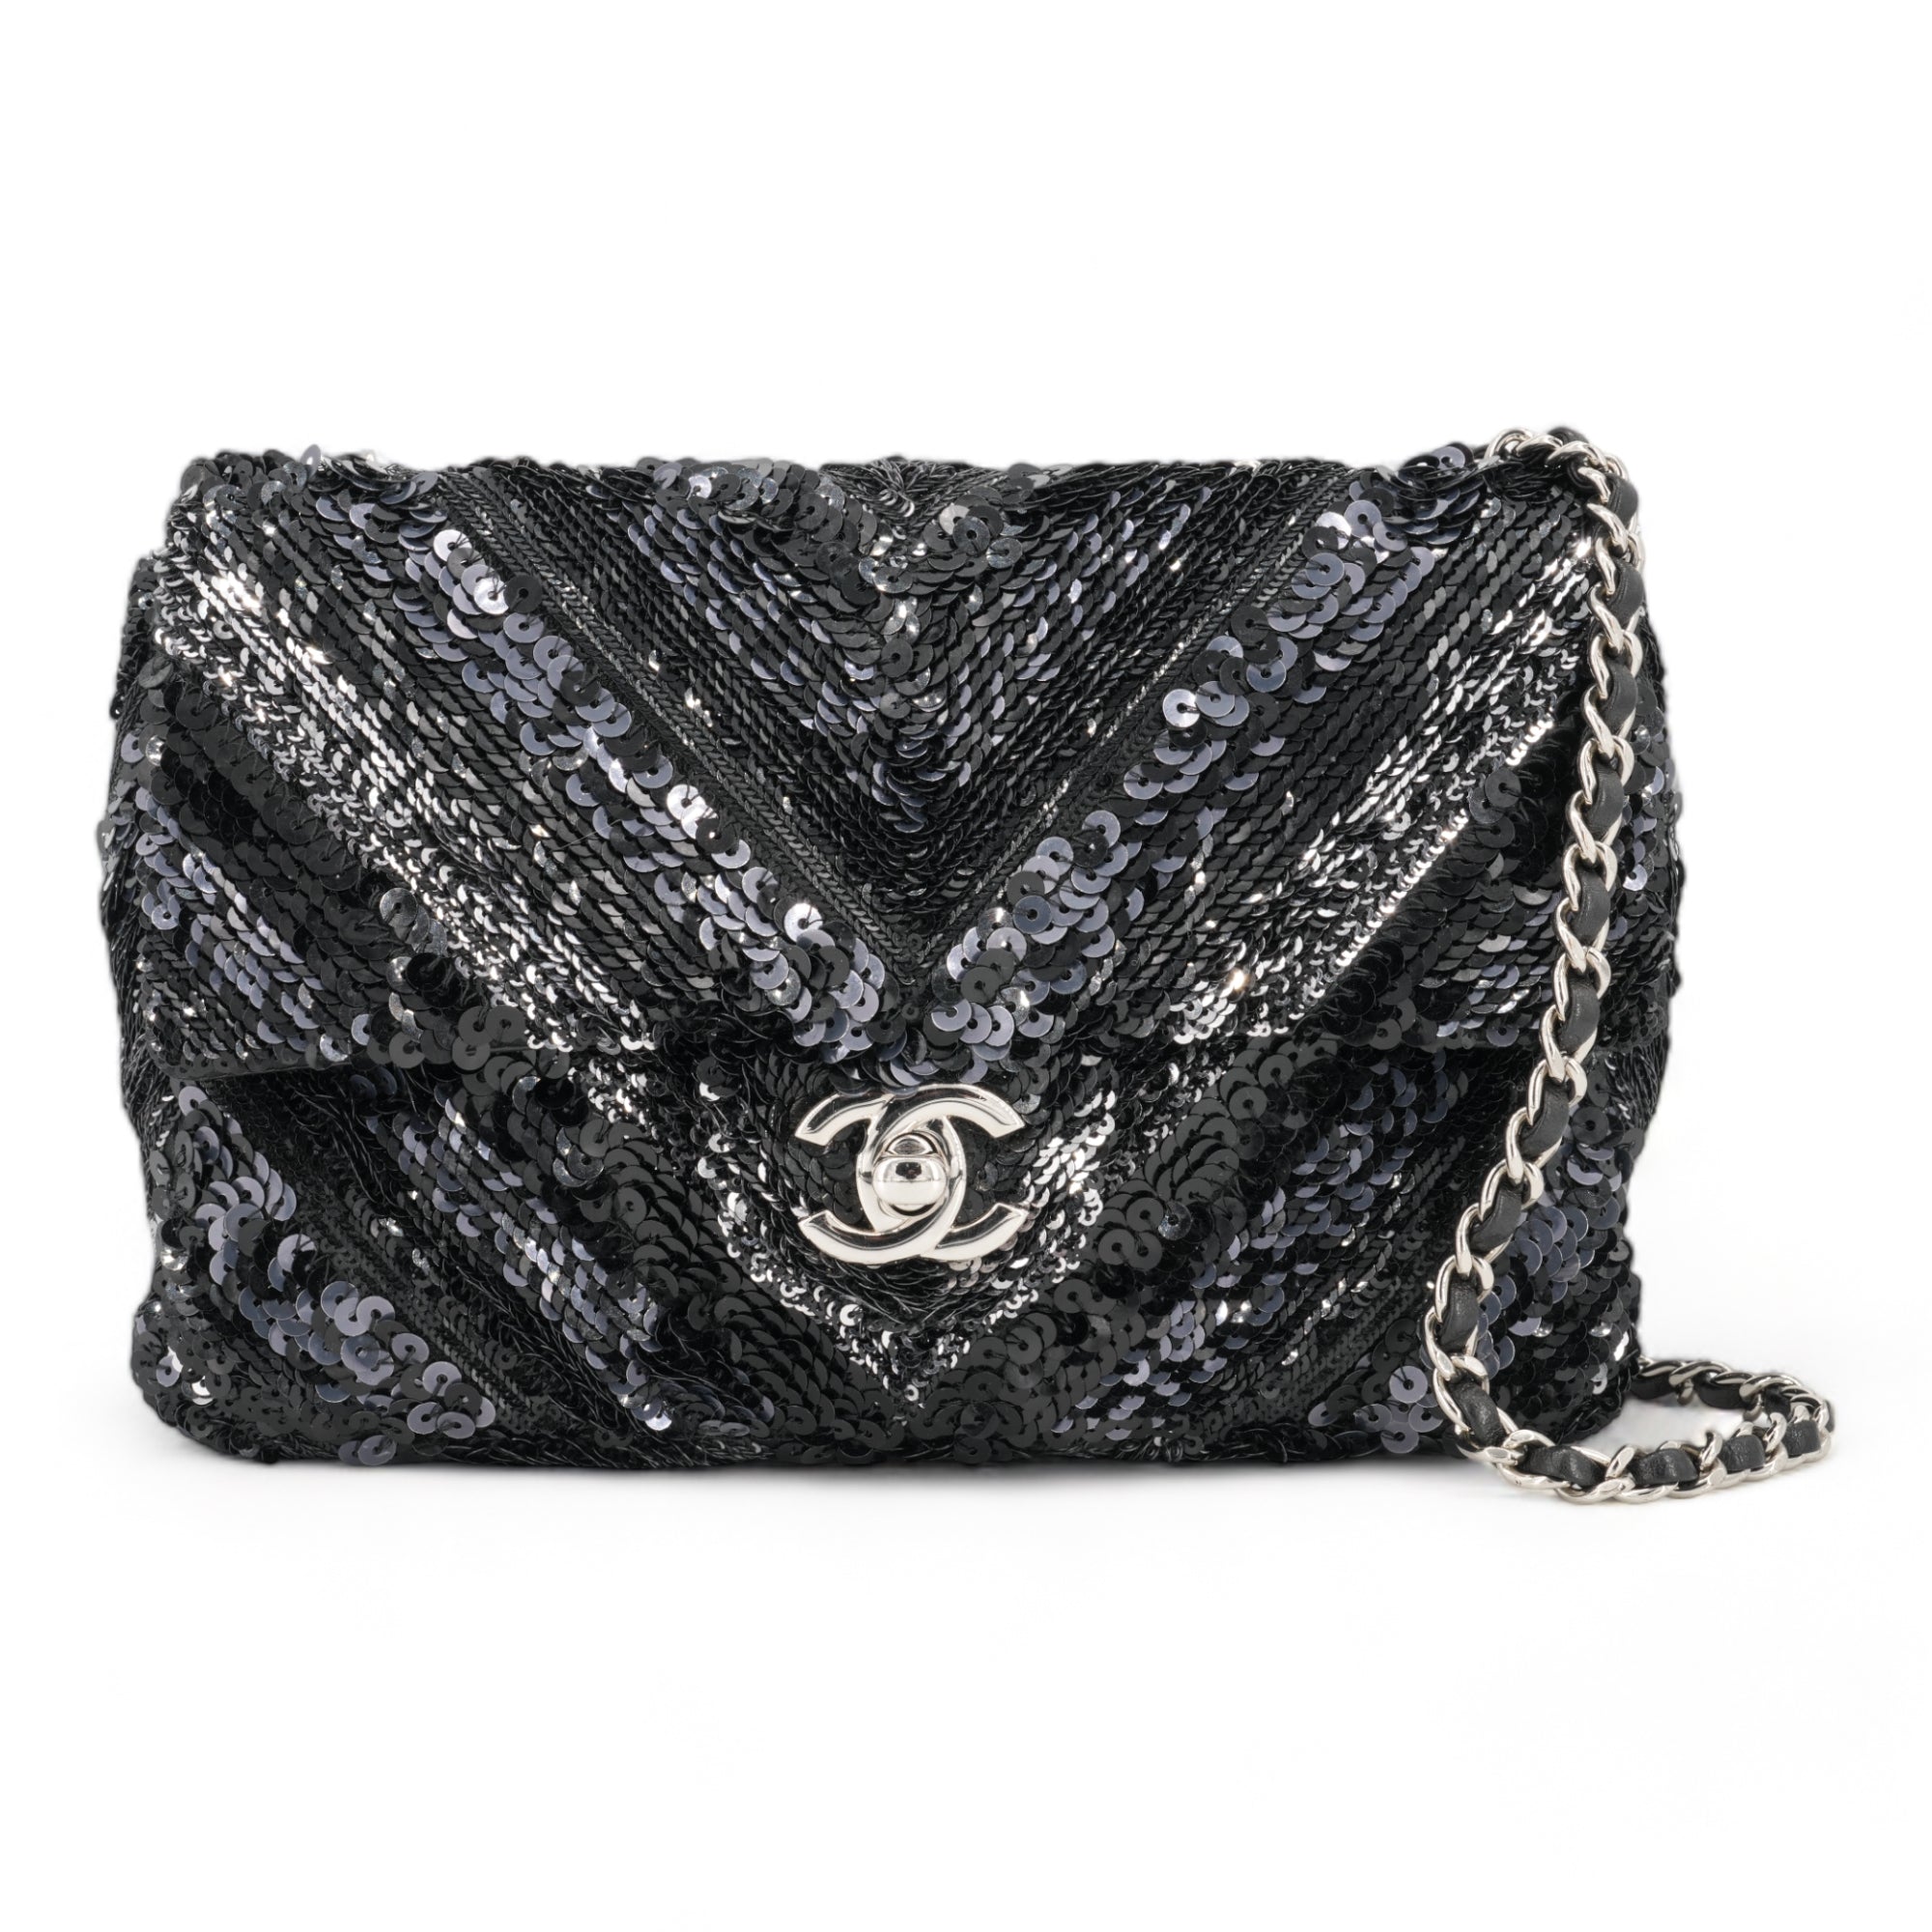 BAGS | Dearluxe - Authentic Luxury Handbags u0026 Accessories